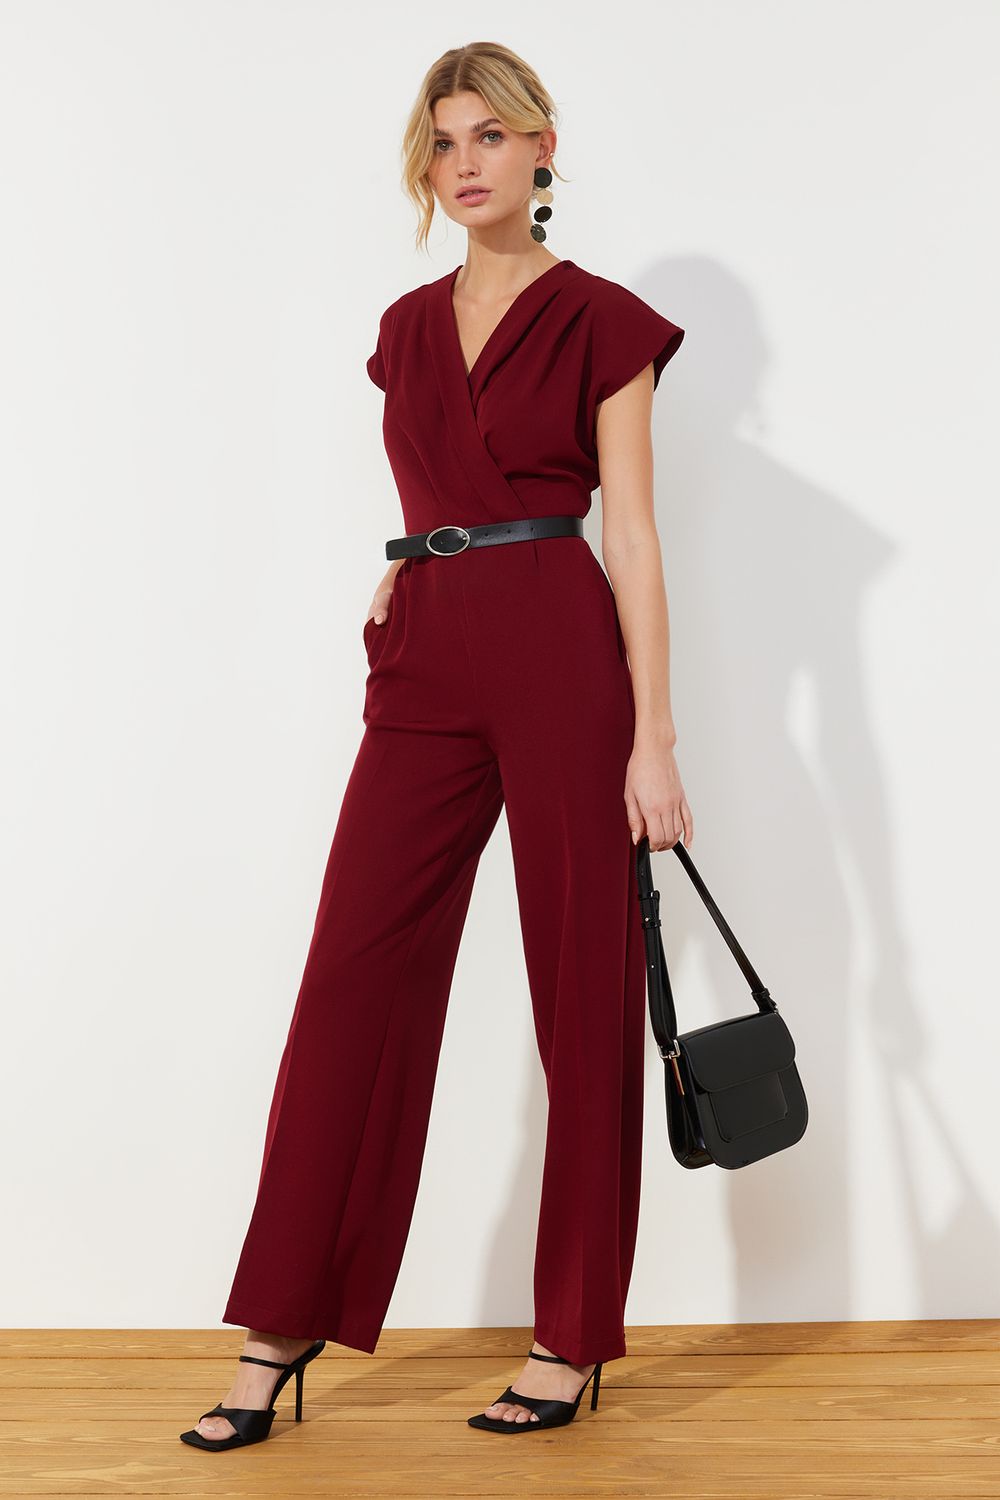 VOLT CLOTHİNG Women's Black Pocket Strap Casual Flowy Jumpsuit - Trendyol